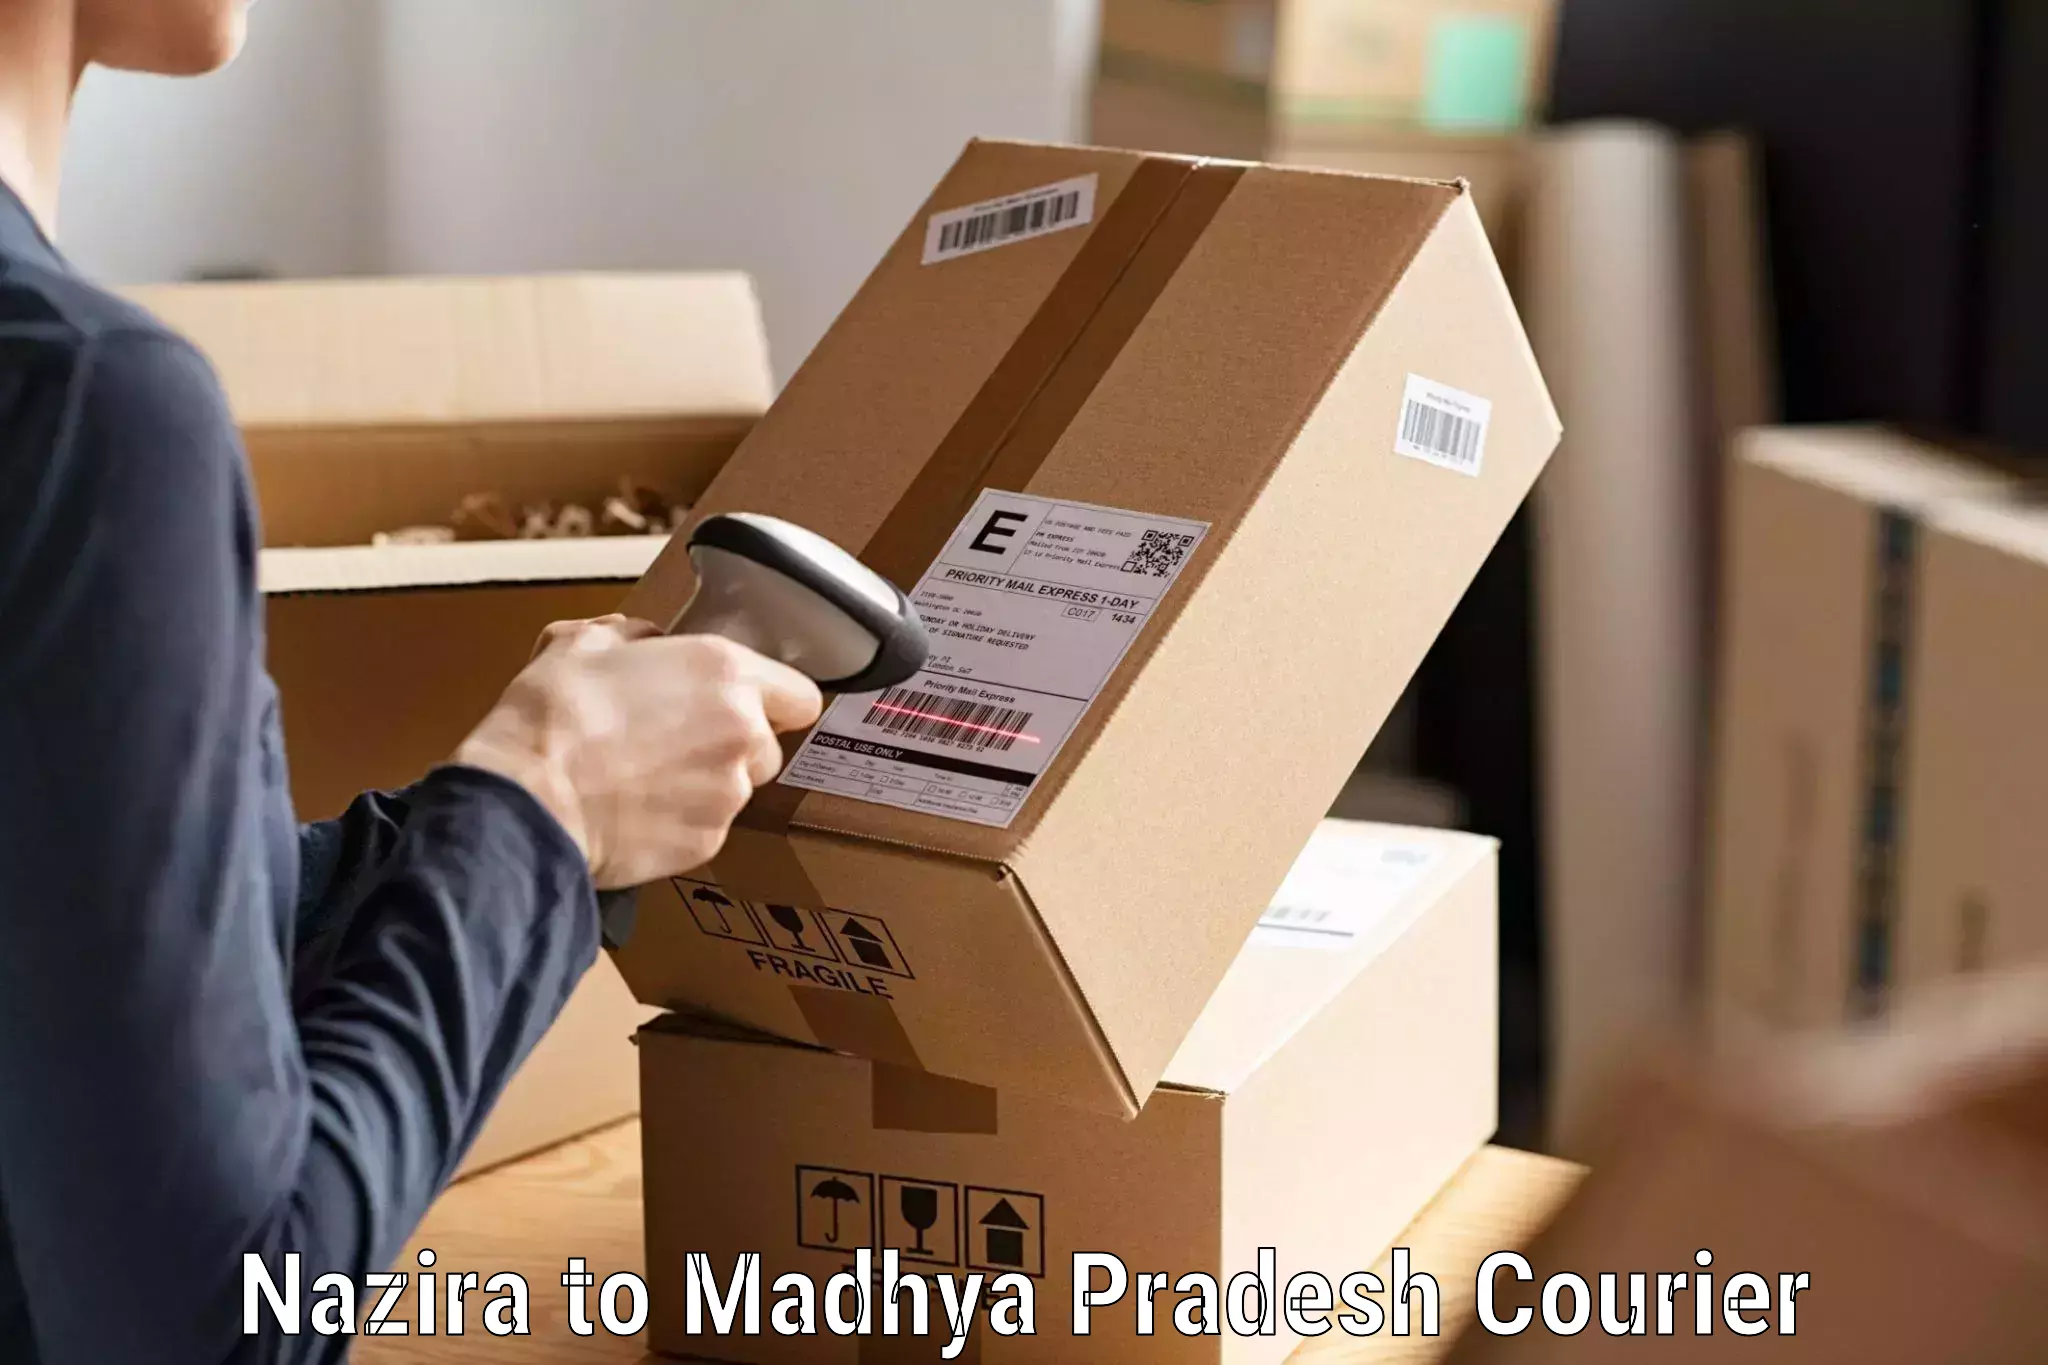 Courier service comparison Nazira to Vidisha